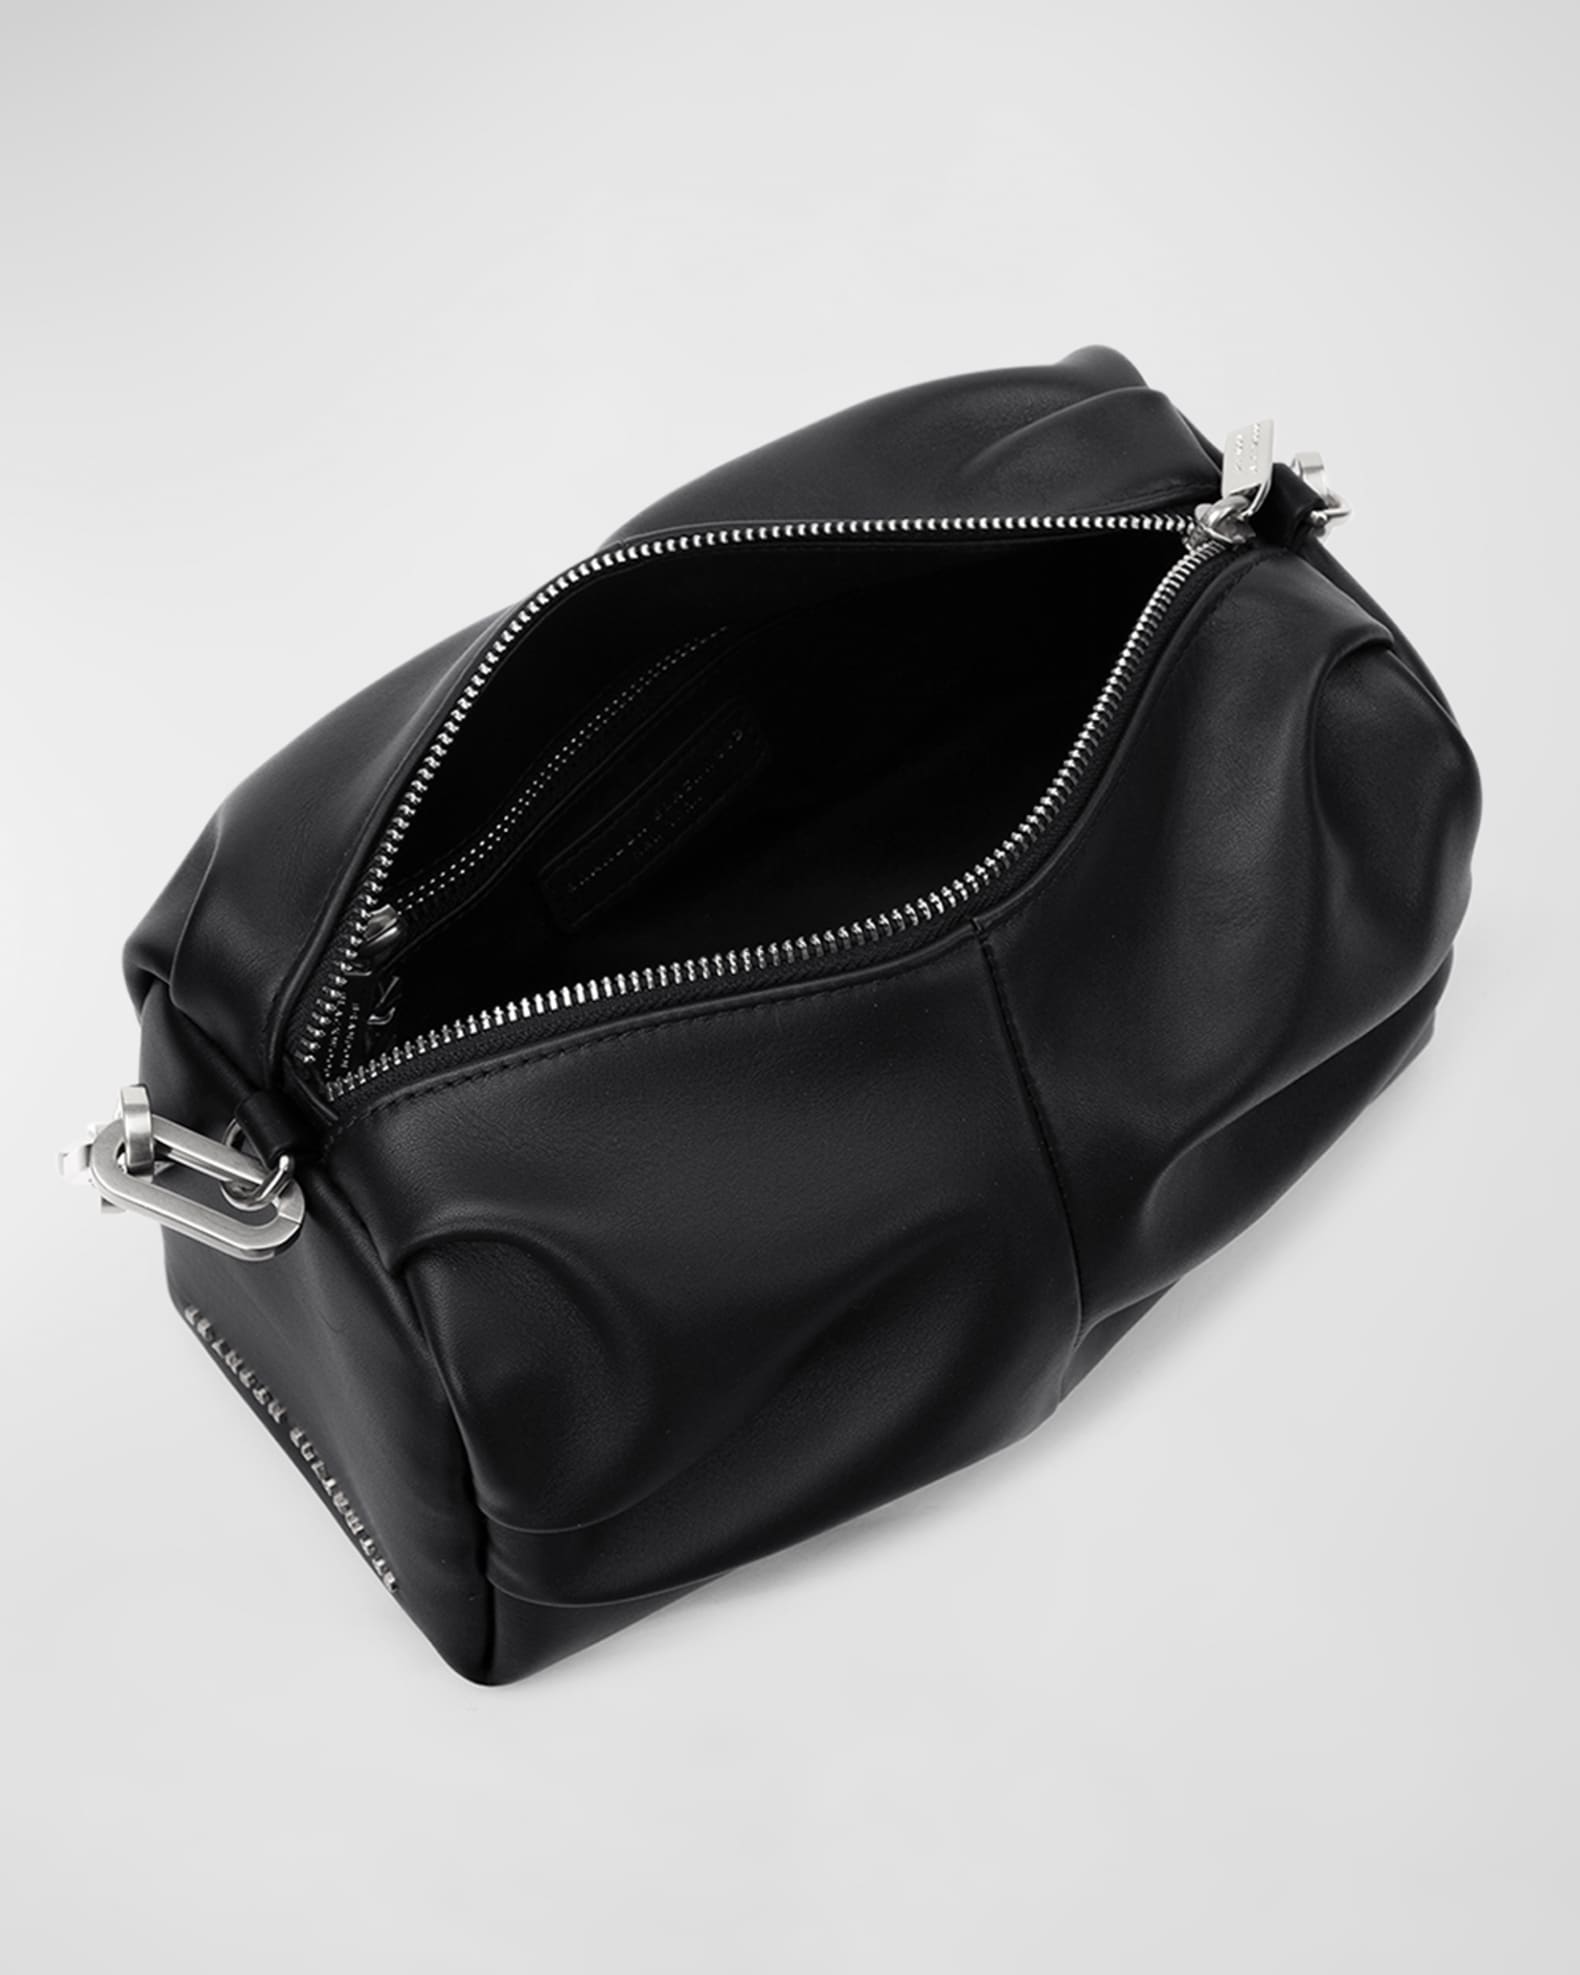 Brandon Blackwood Valentia Ruched Leather Chain Shoulder Bag, Women's, Handbags & Purses Shoulder Bags